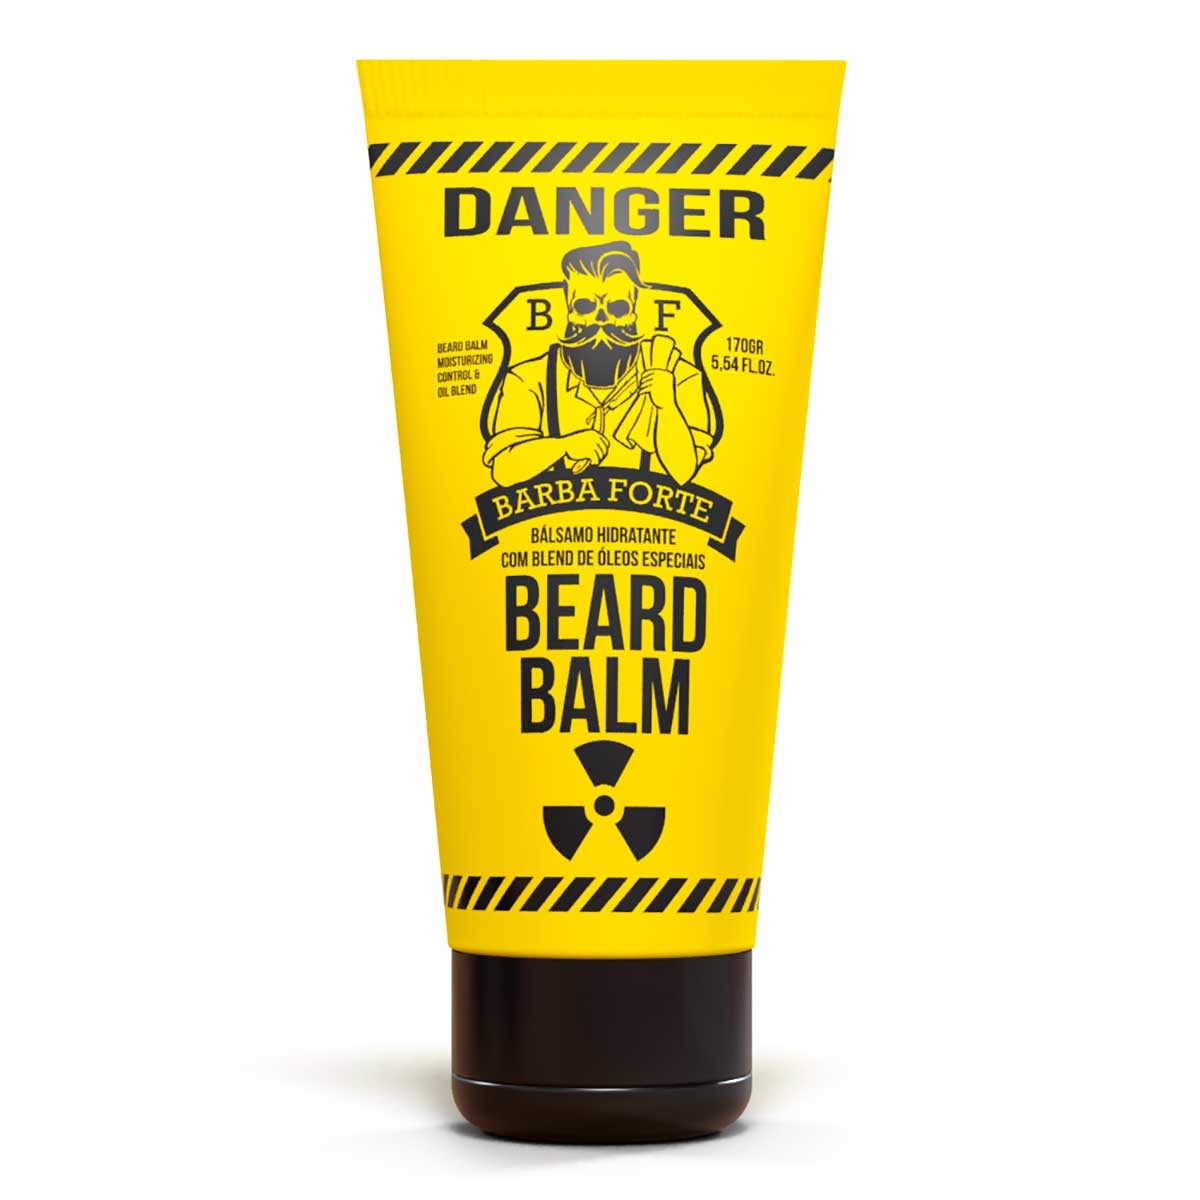 Bálsamo Hidratante Barba Forte Danger Beard Balm com 170g 170g